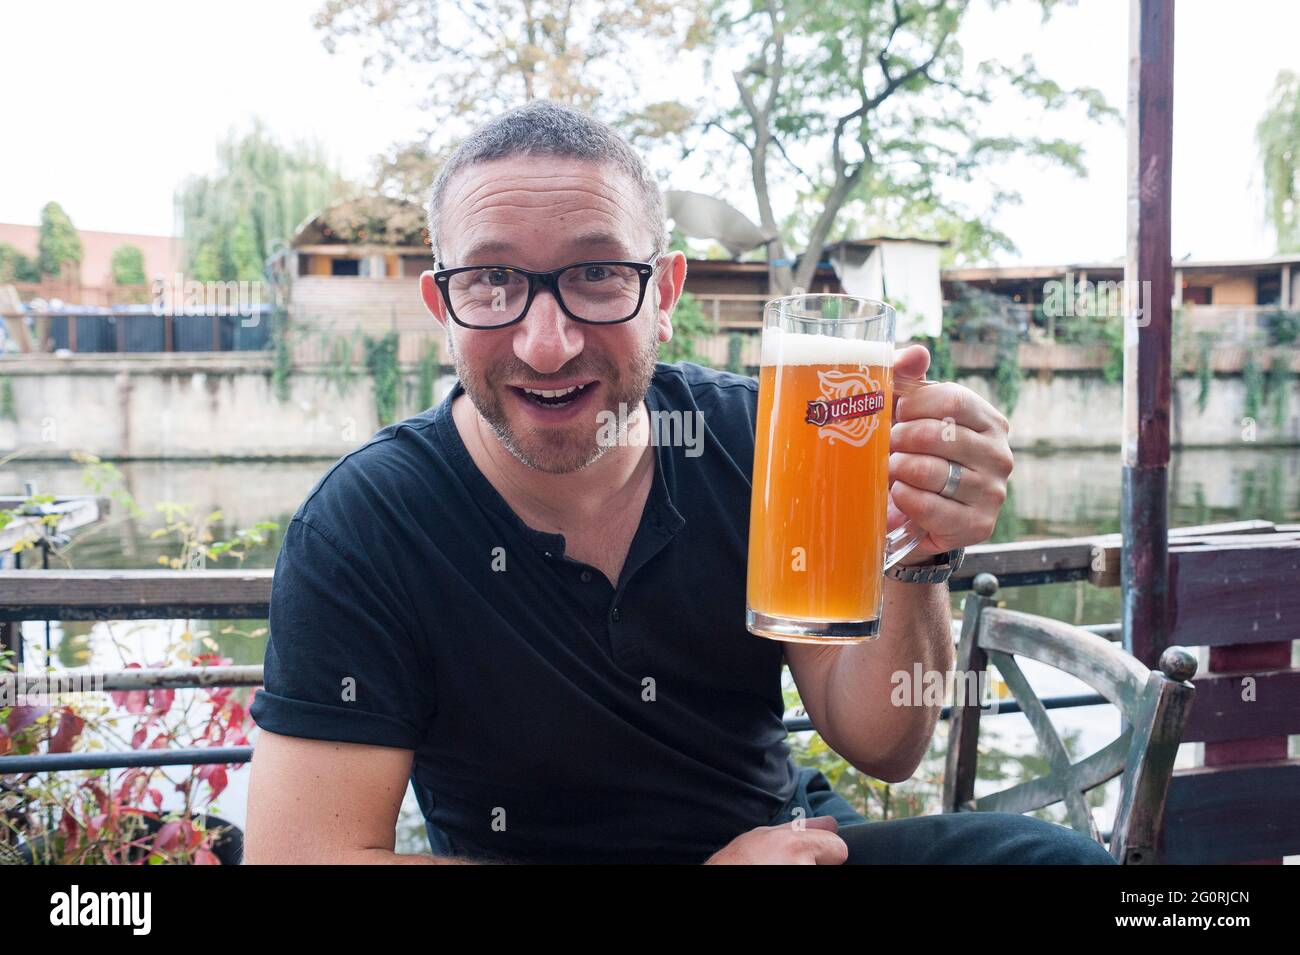 Enjoying traditional street food / restaurants in Berlin Germany and drinking beer Stock Photo